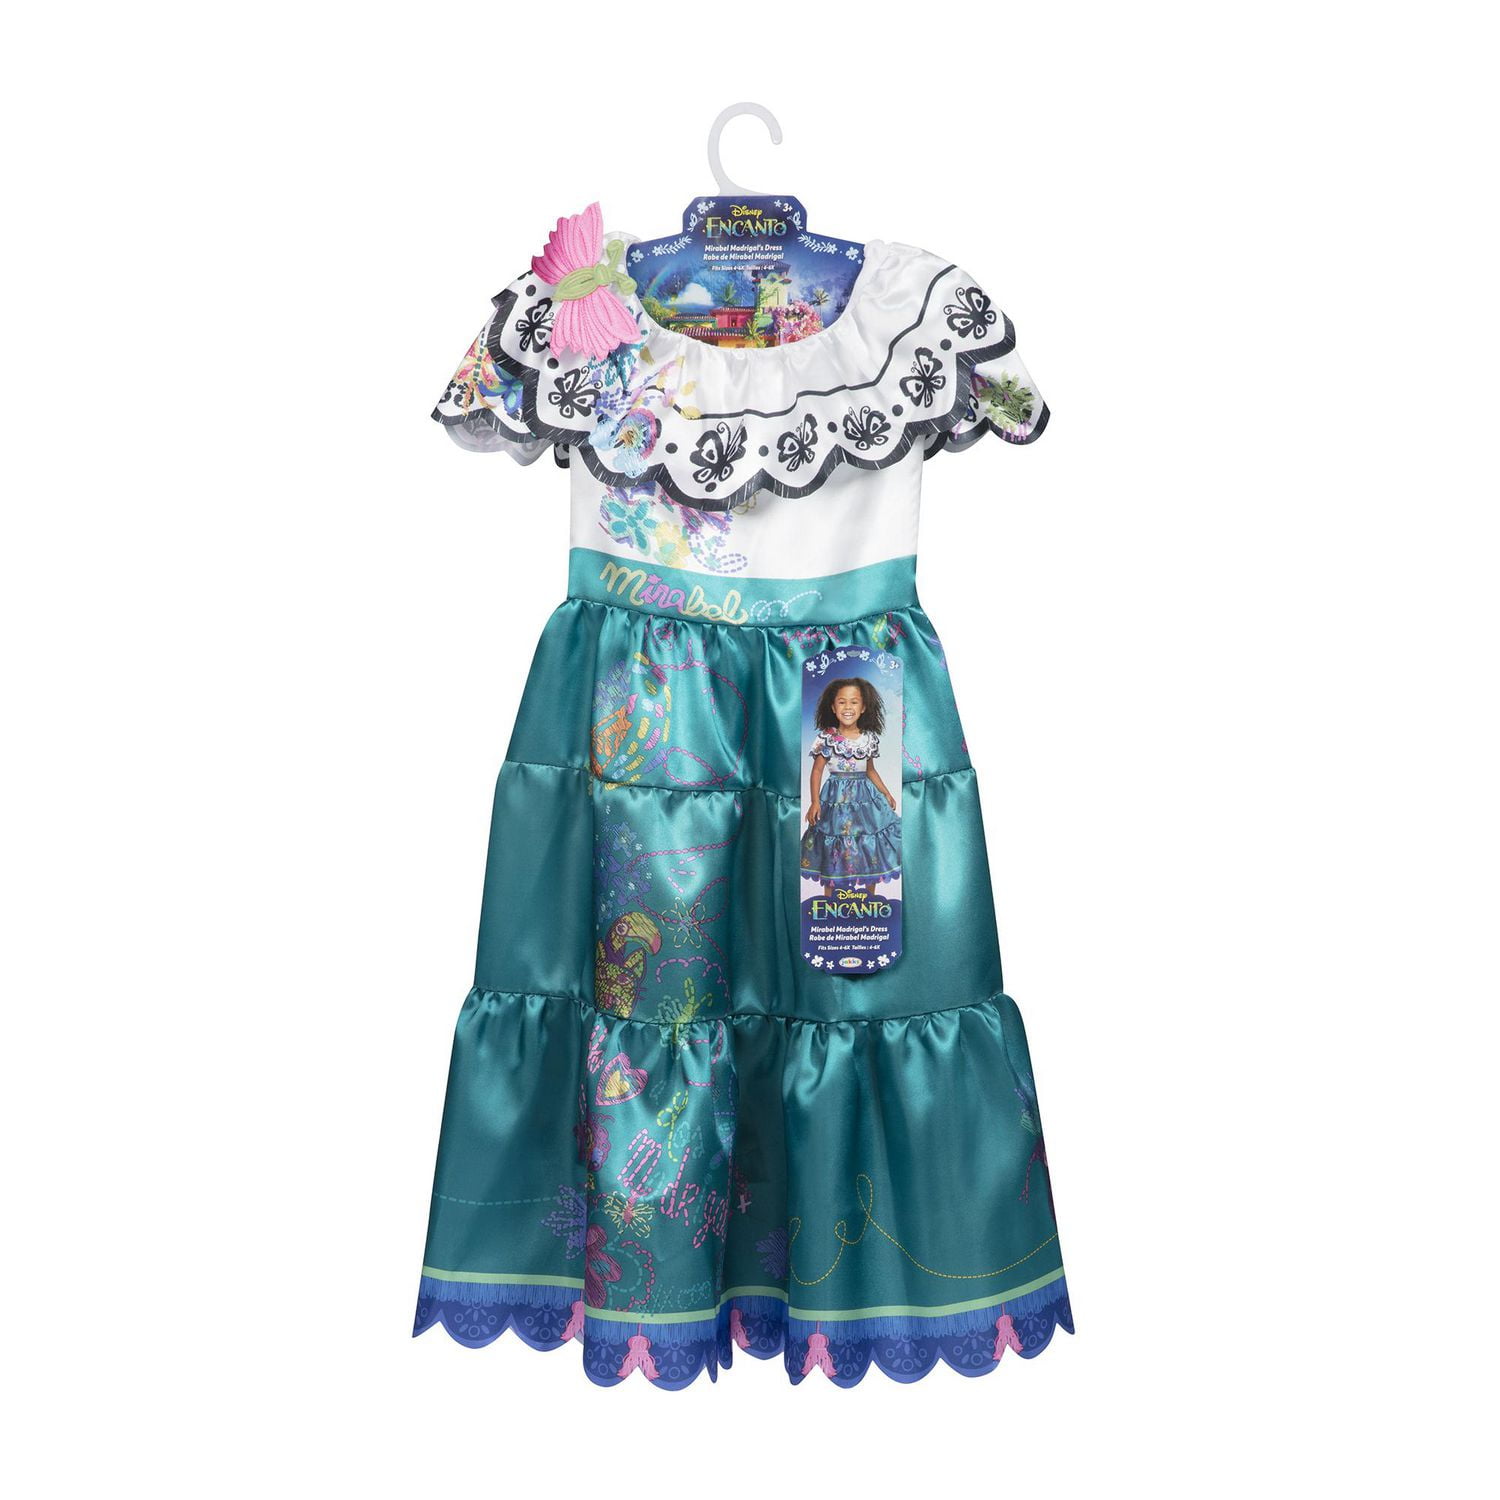 Encanto Disney Mirabel Girl's Fancy-Dress Costume, S (4-6X) 